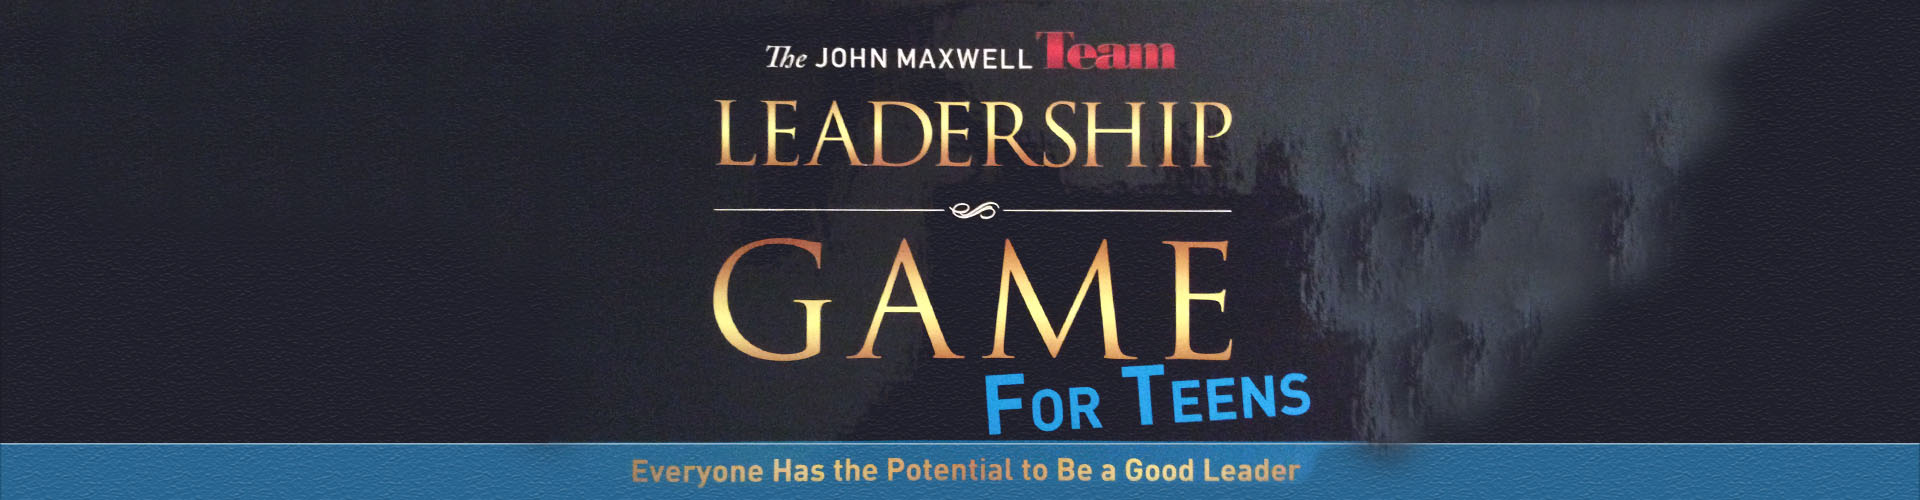 John Maxwell Team - LEADERSHIP GAME FOR TEENS